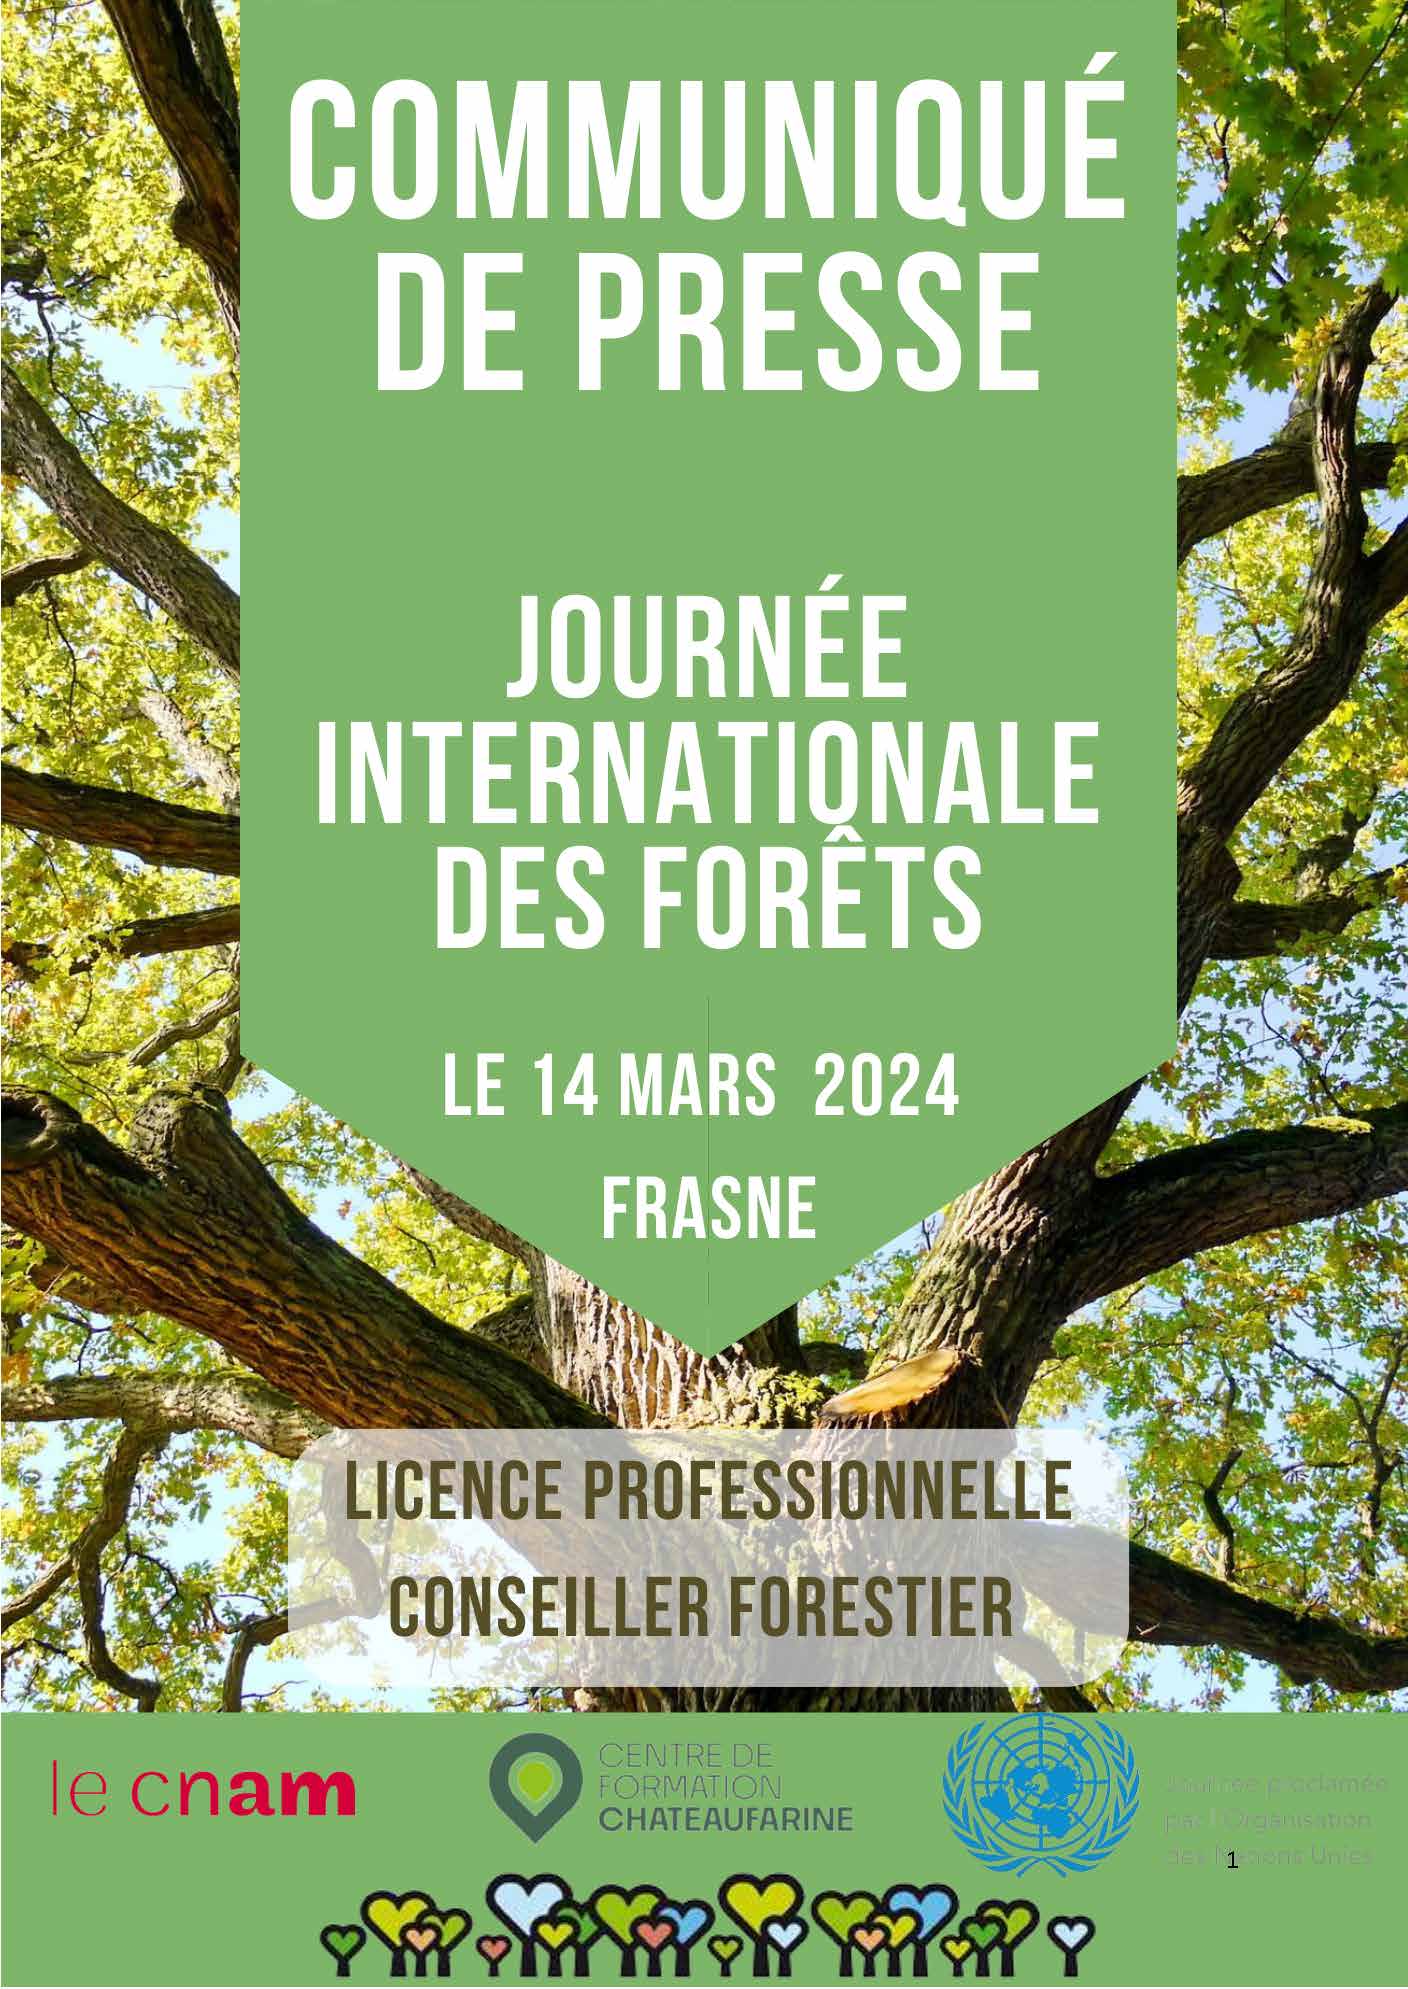 Journée Internationale des Forêts 2024 - COFORET